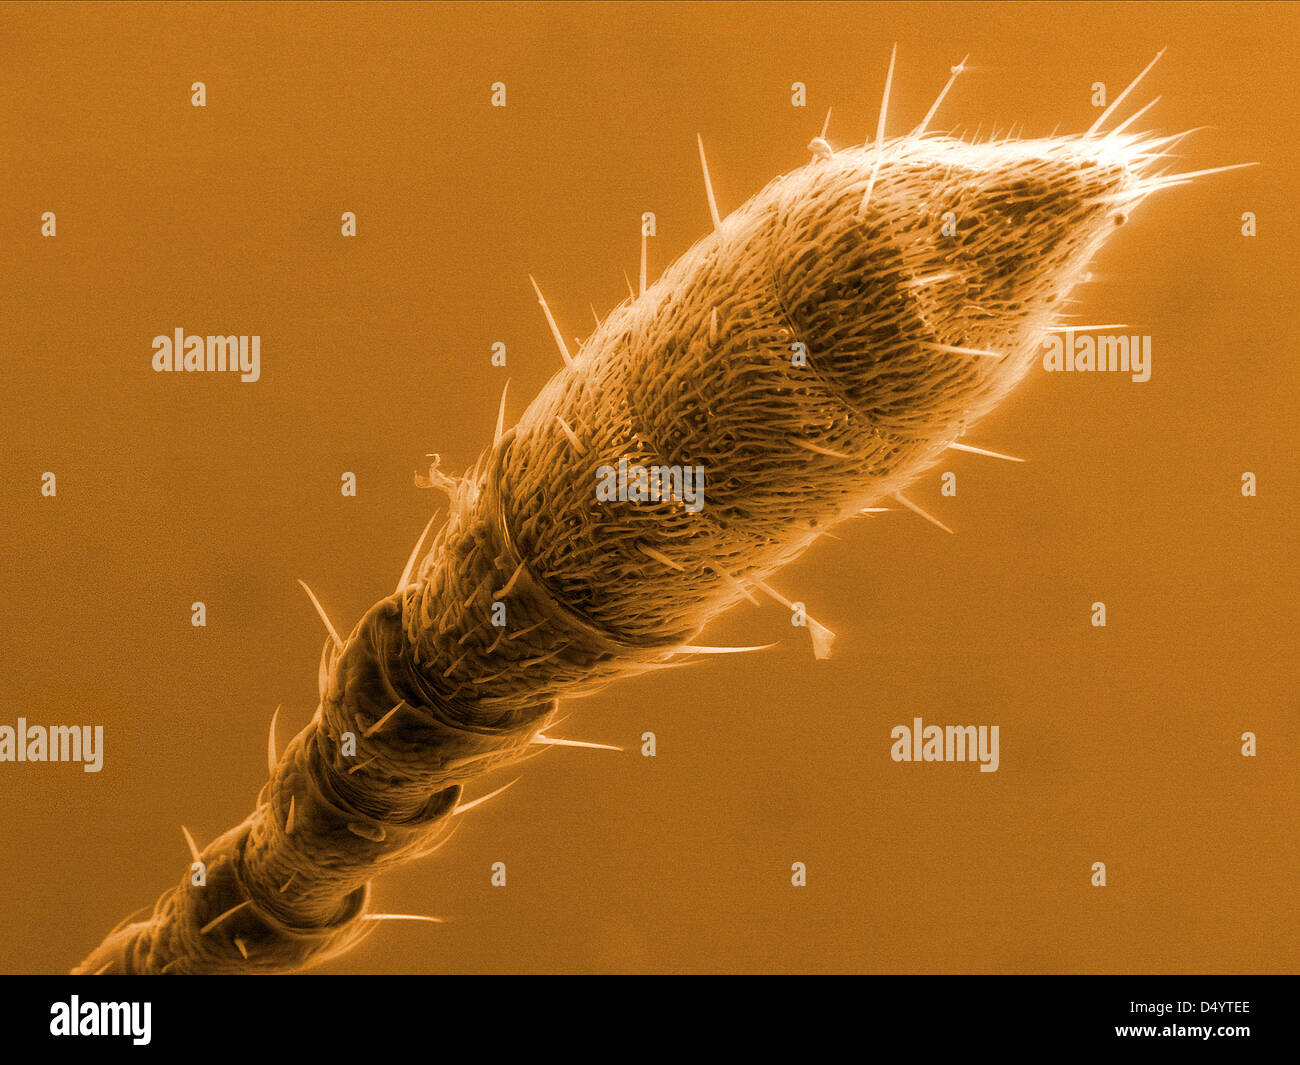 Antenna of hazel leaf-roller weevil (Apoderus coryli), scanning electron microscopy Stock Photo